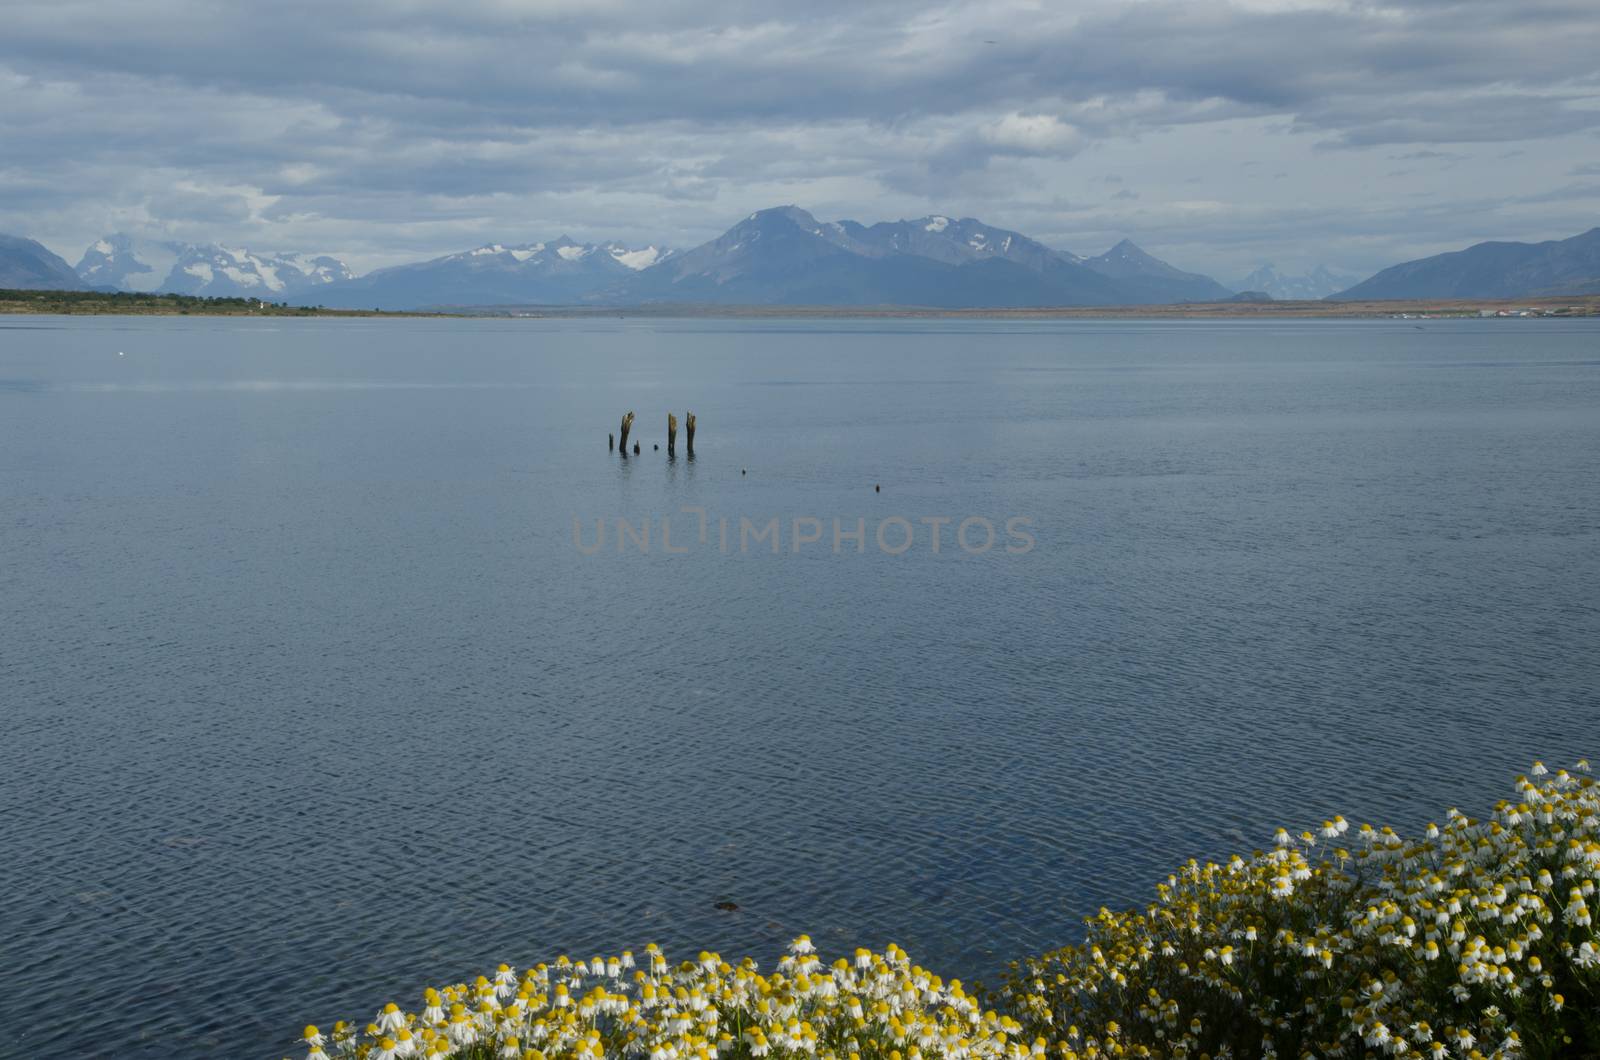 Ultima Esperanza Inlet and Sarmiento Mountain Range from Puerto Natales. Magellan and Chilean Antarctic Region. Chile.